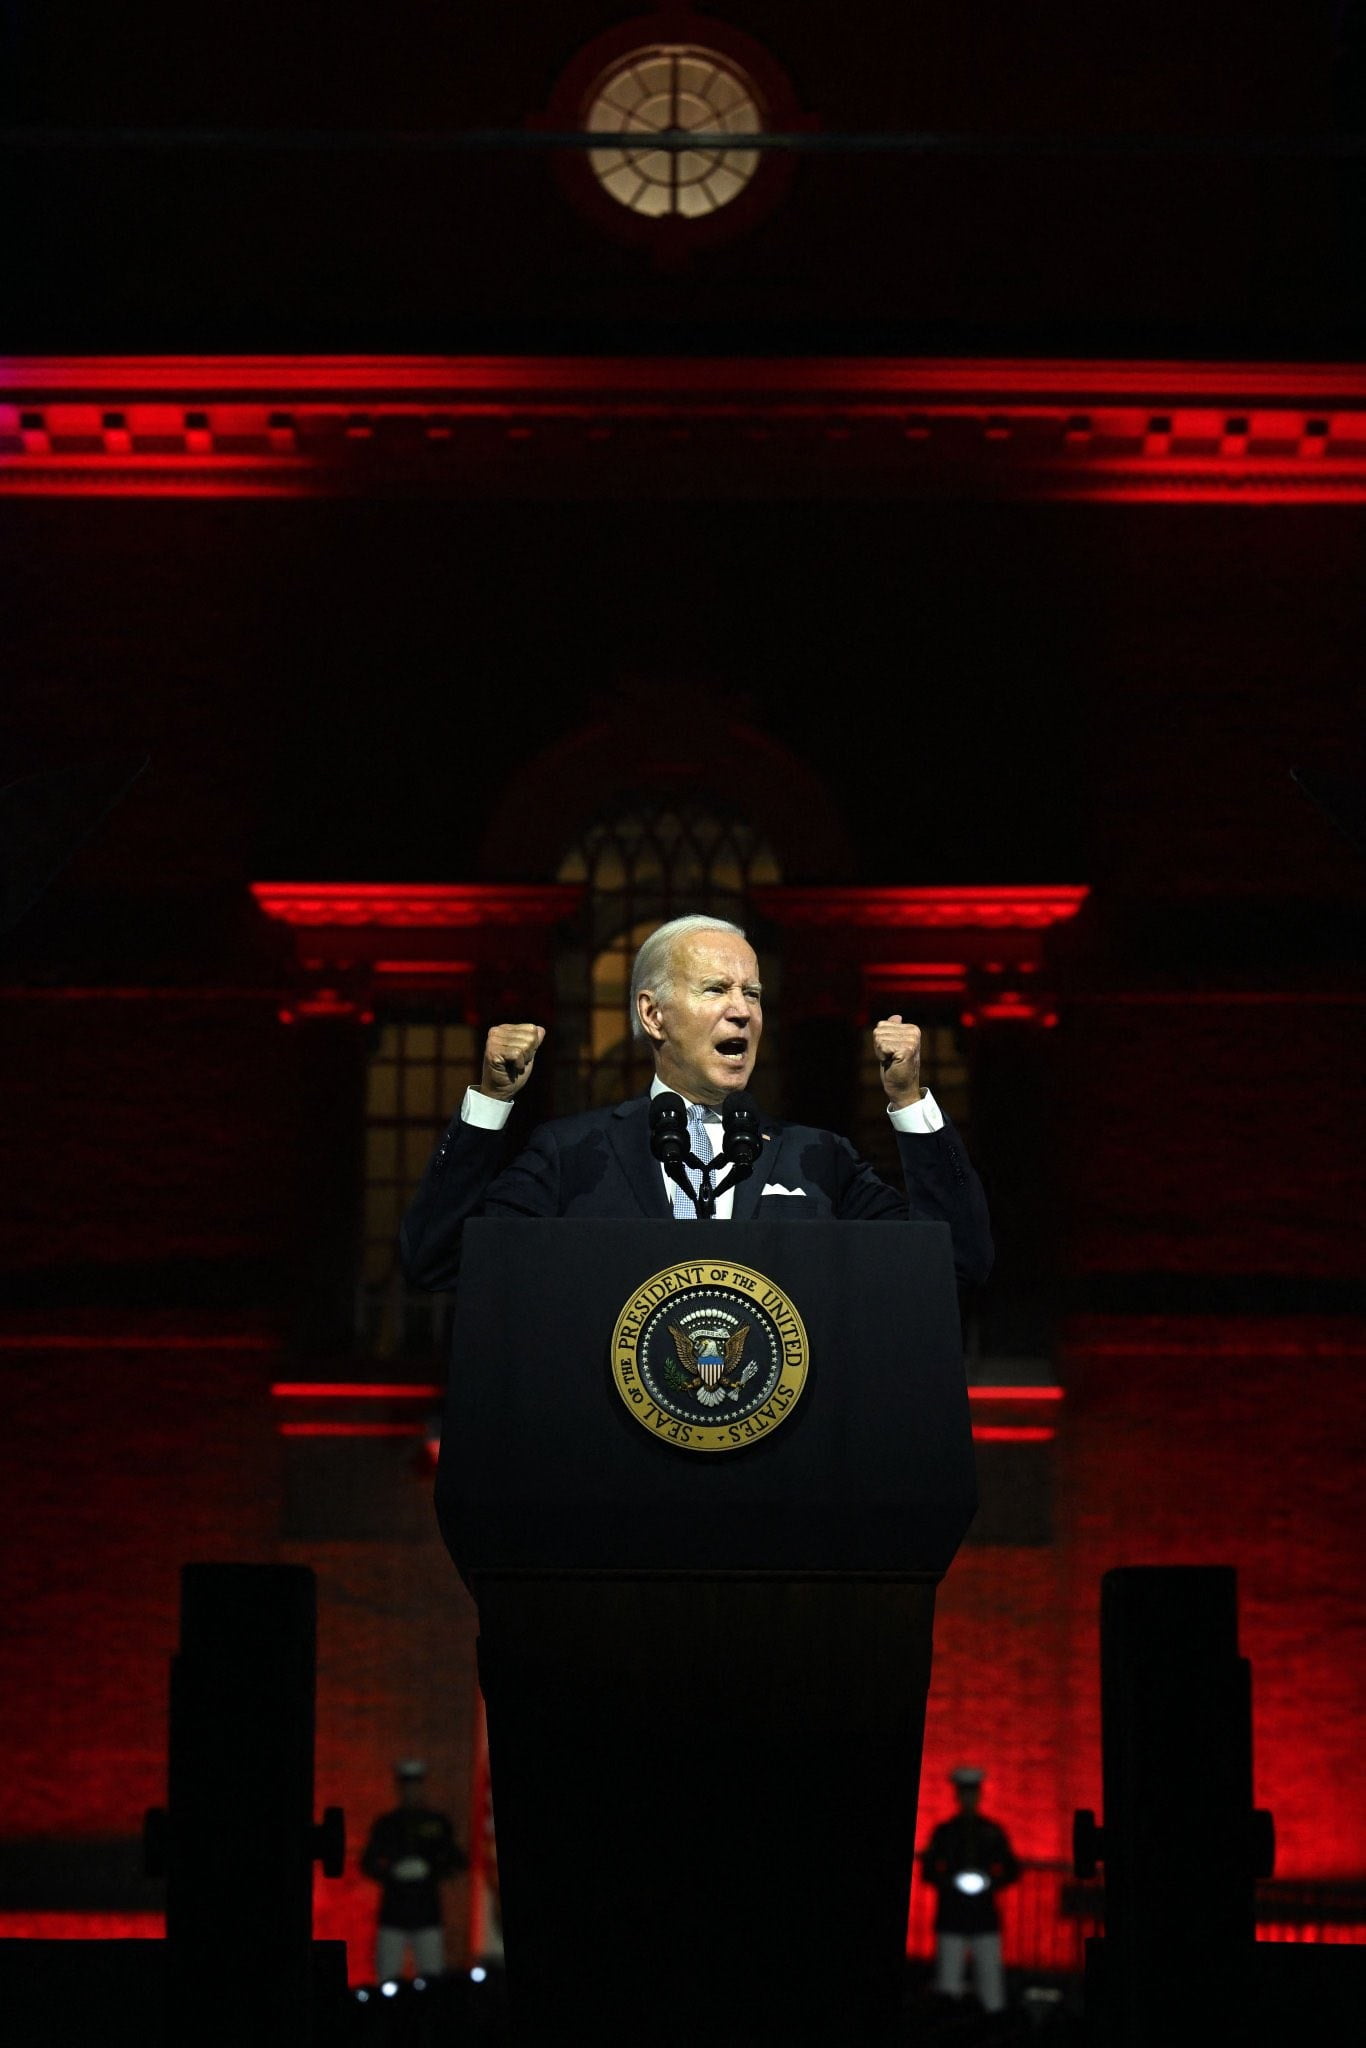 Unhinged Biden, love the aesthetics though